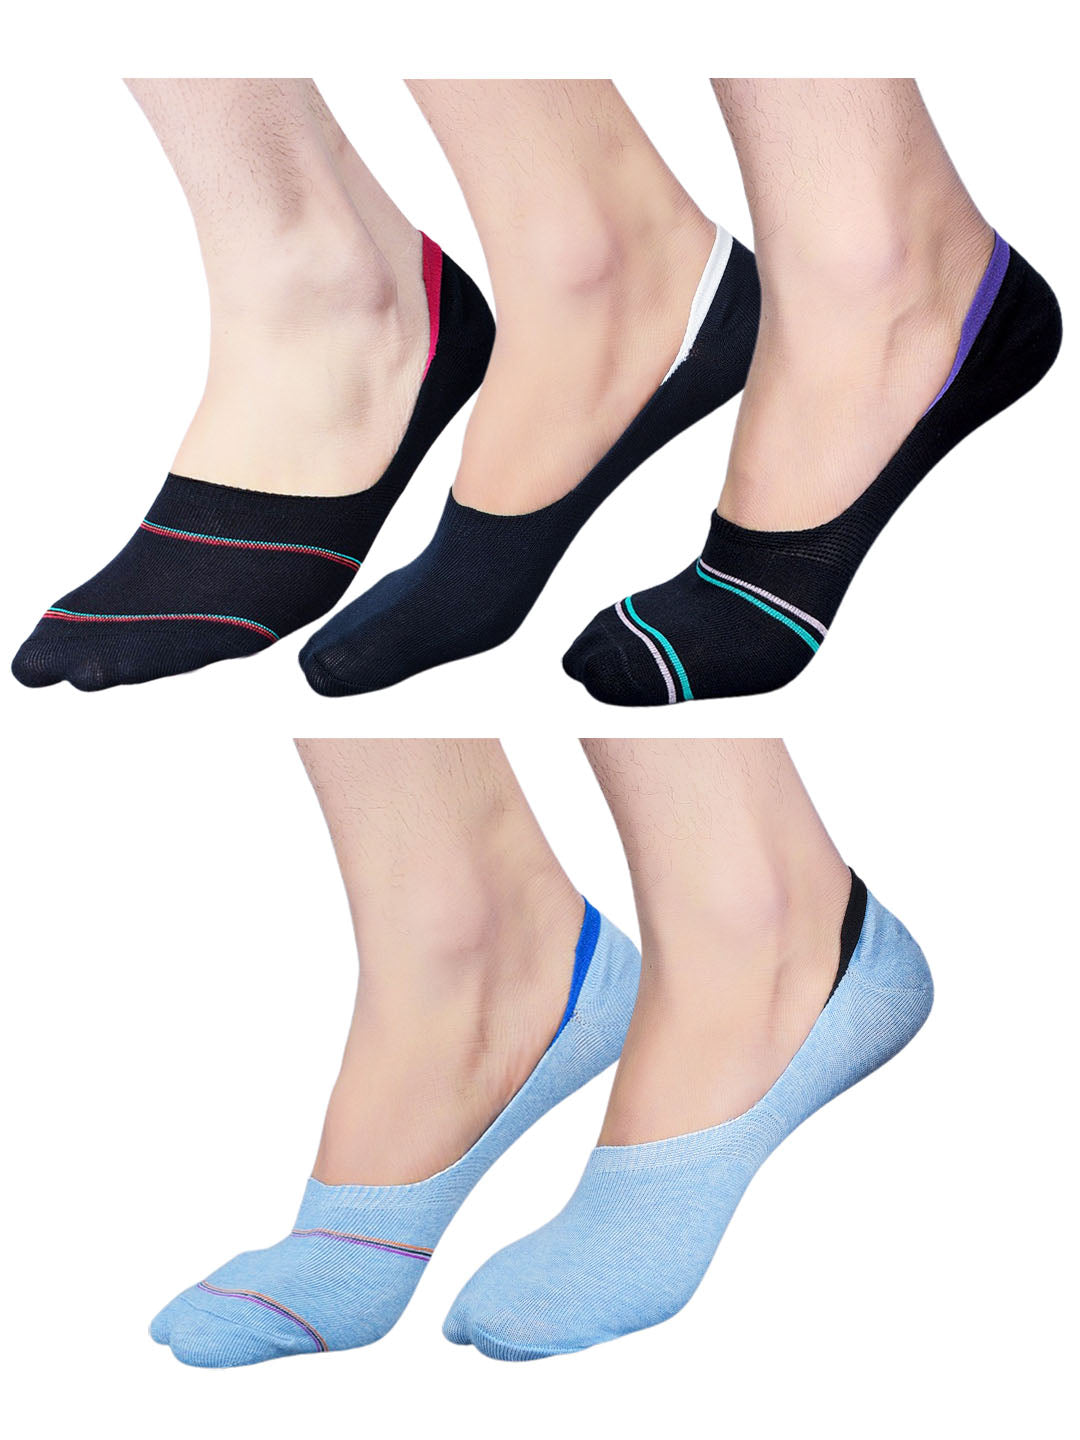 Cobb Multi Color Footie Shoe Liner Socks Pack of 5